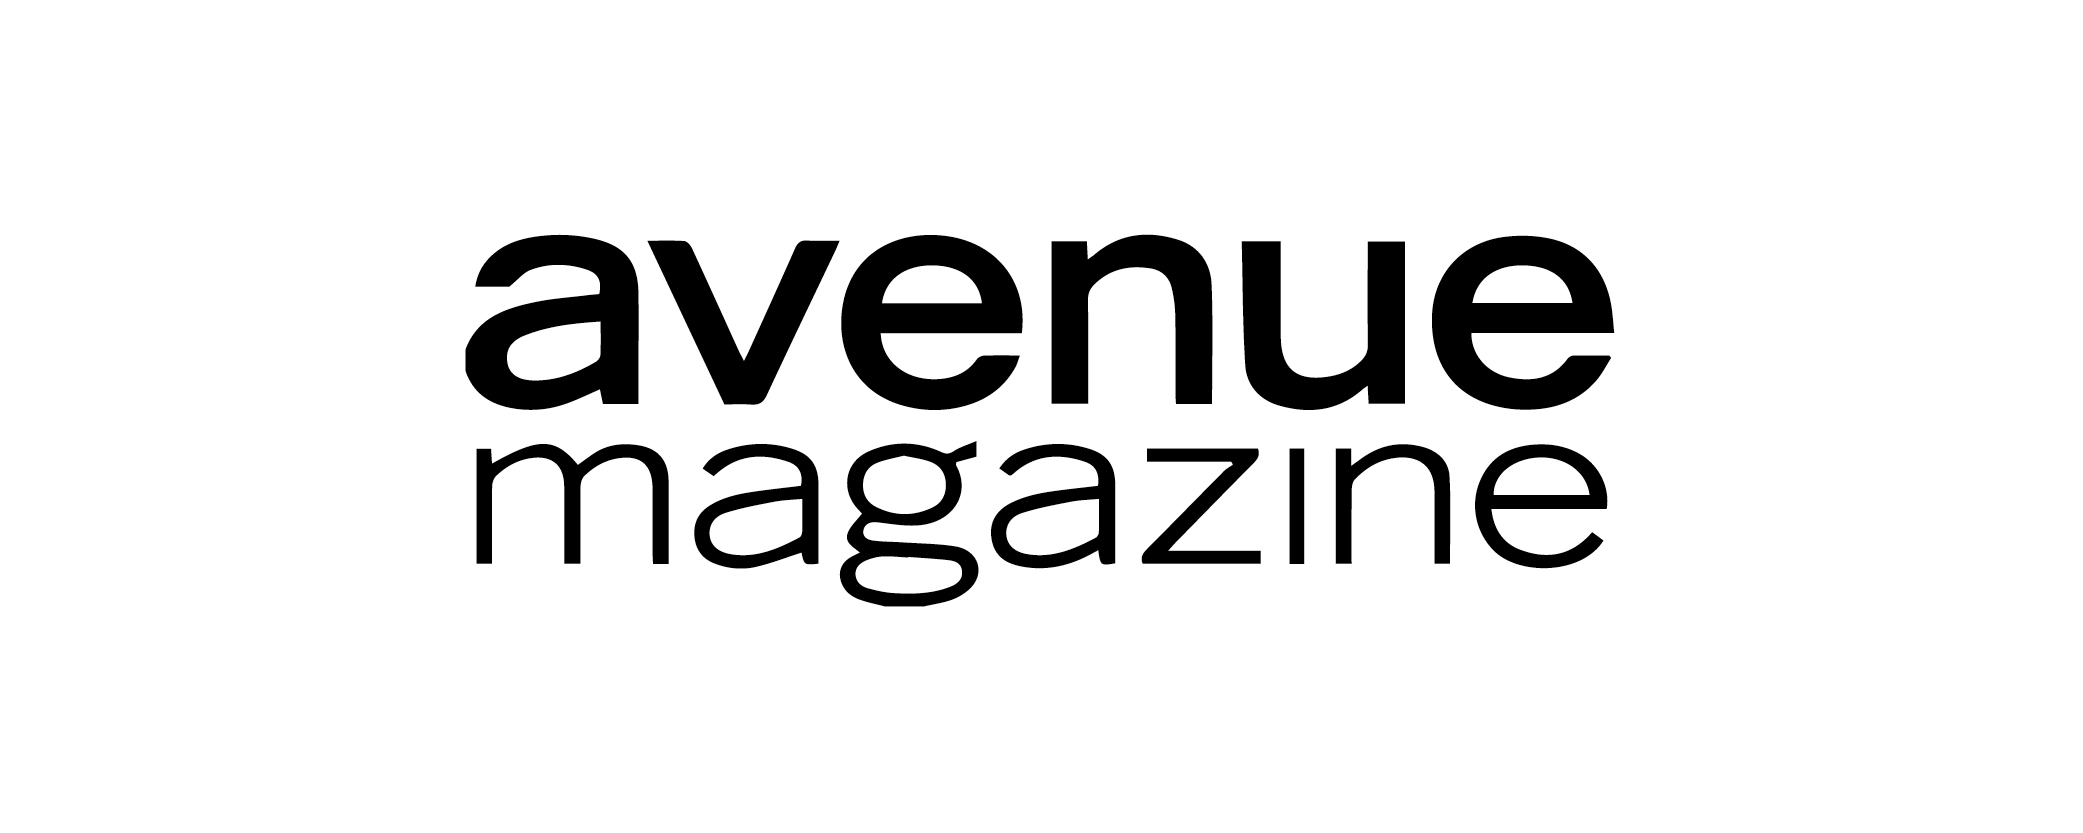 avenue magazine.jpg